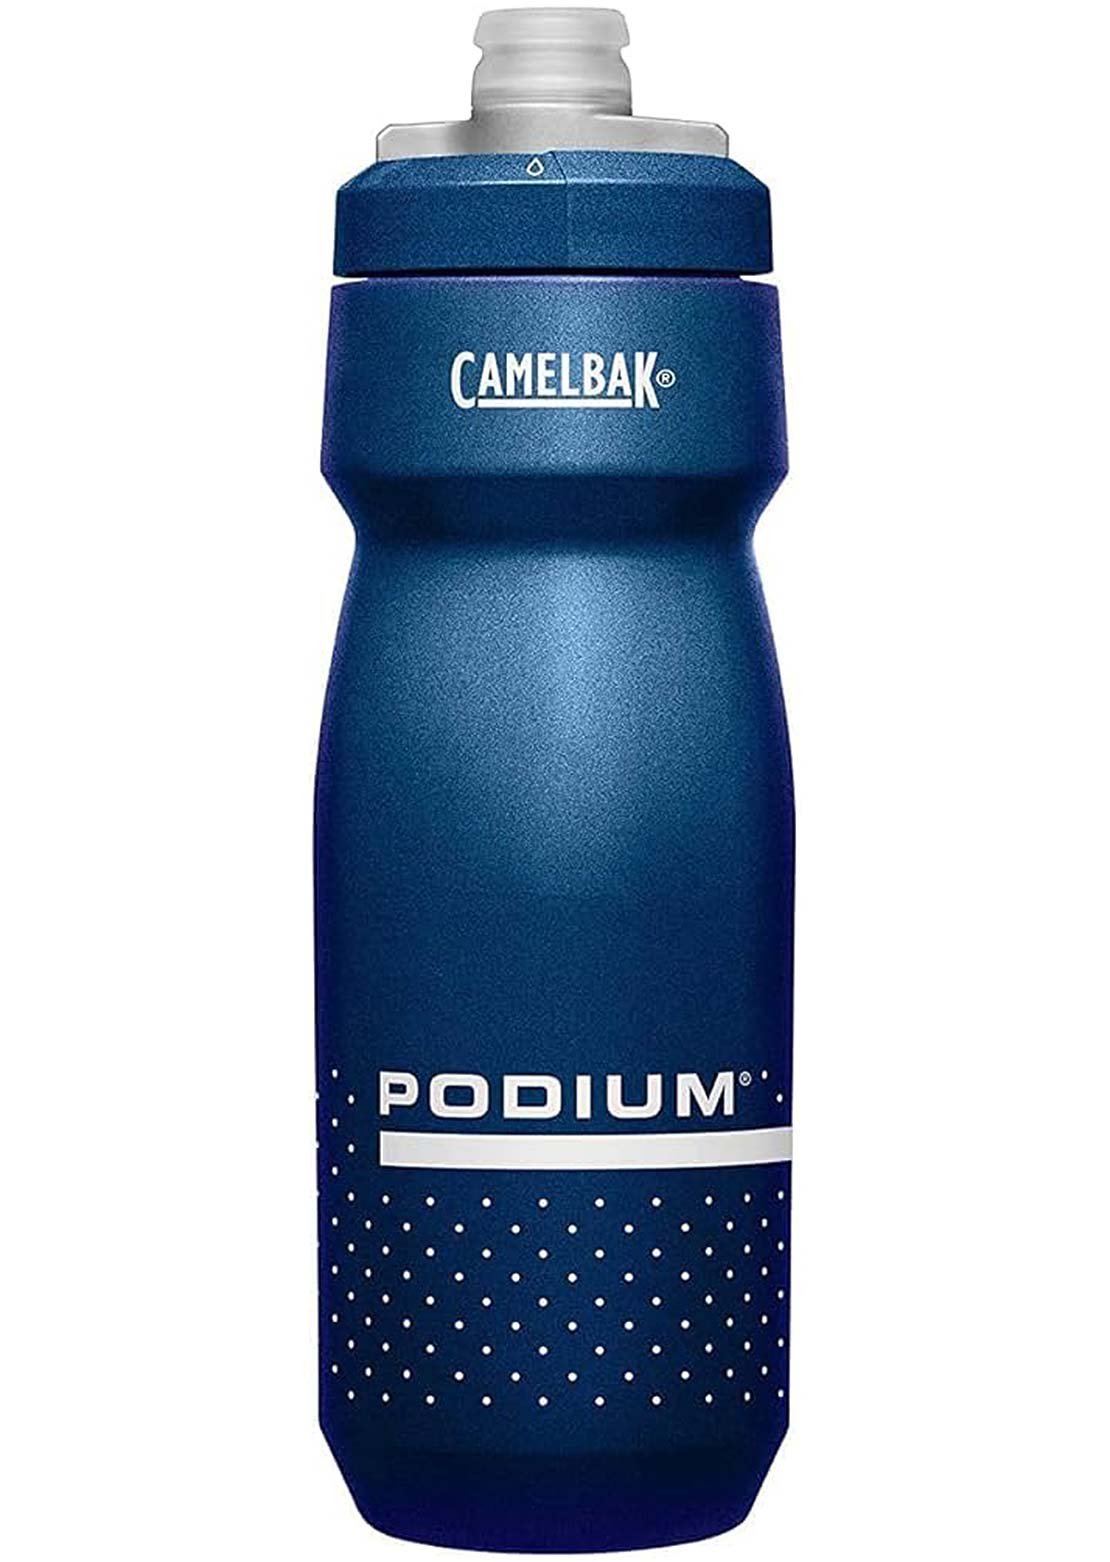 Camelbak Podium 24 oz Bike Water Bottle Navy Blue